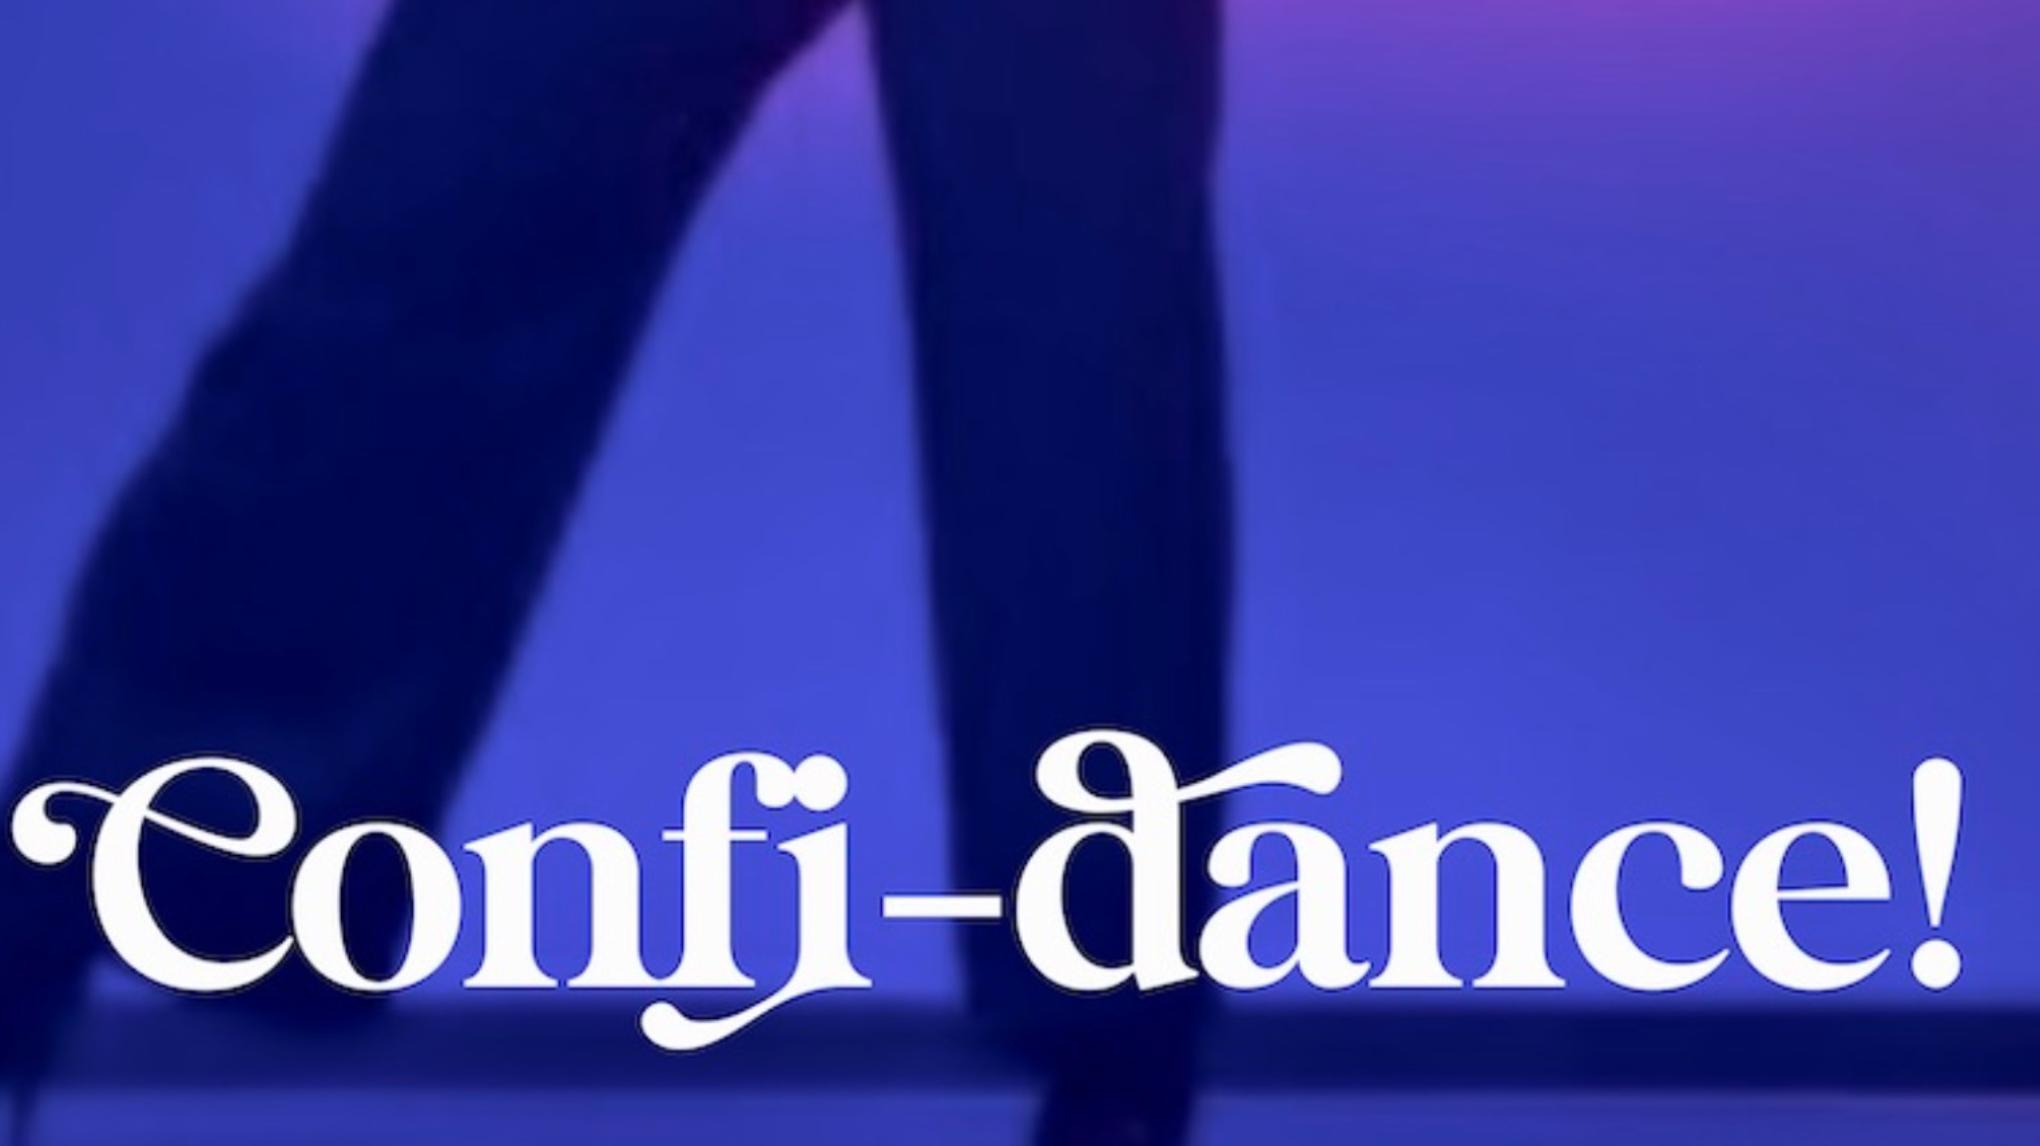 CONFI-DANCE!